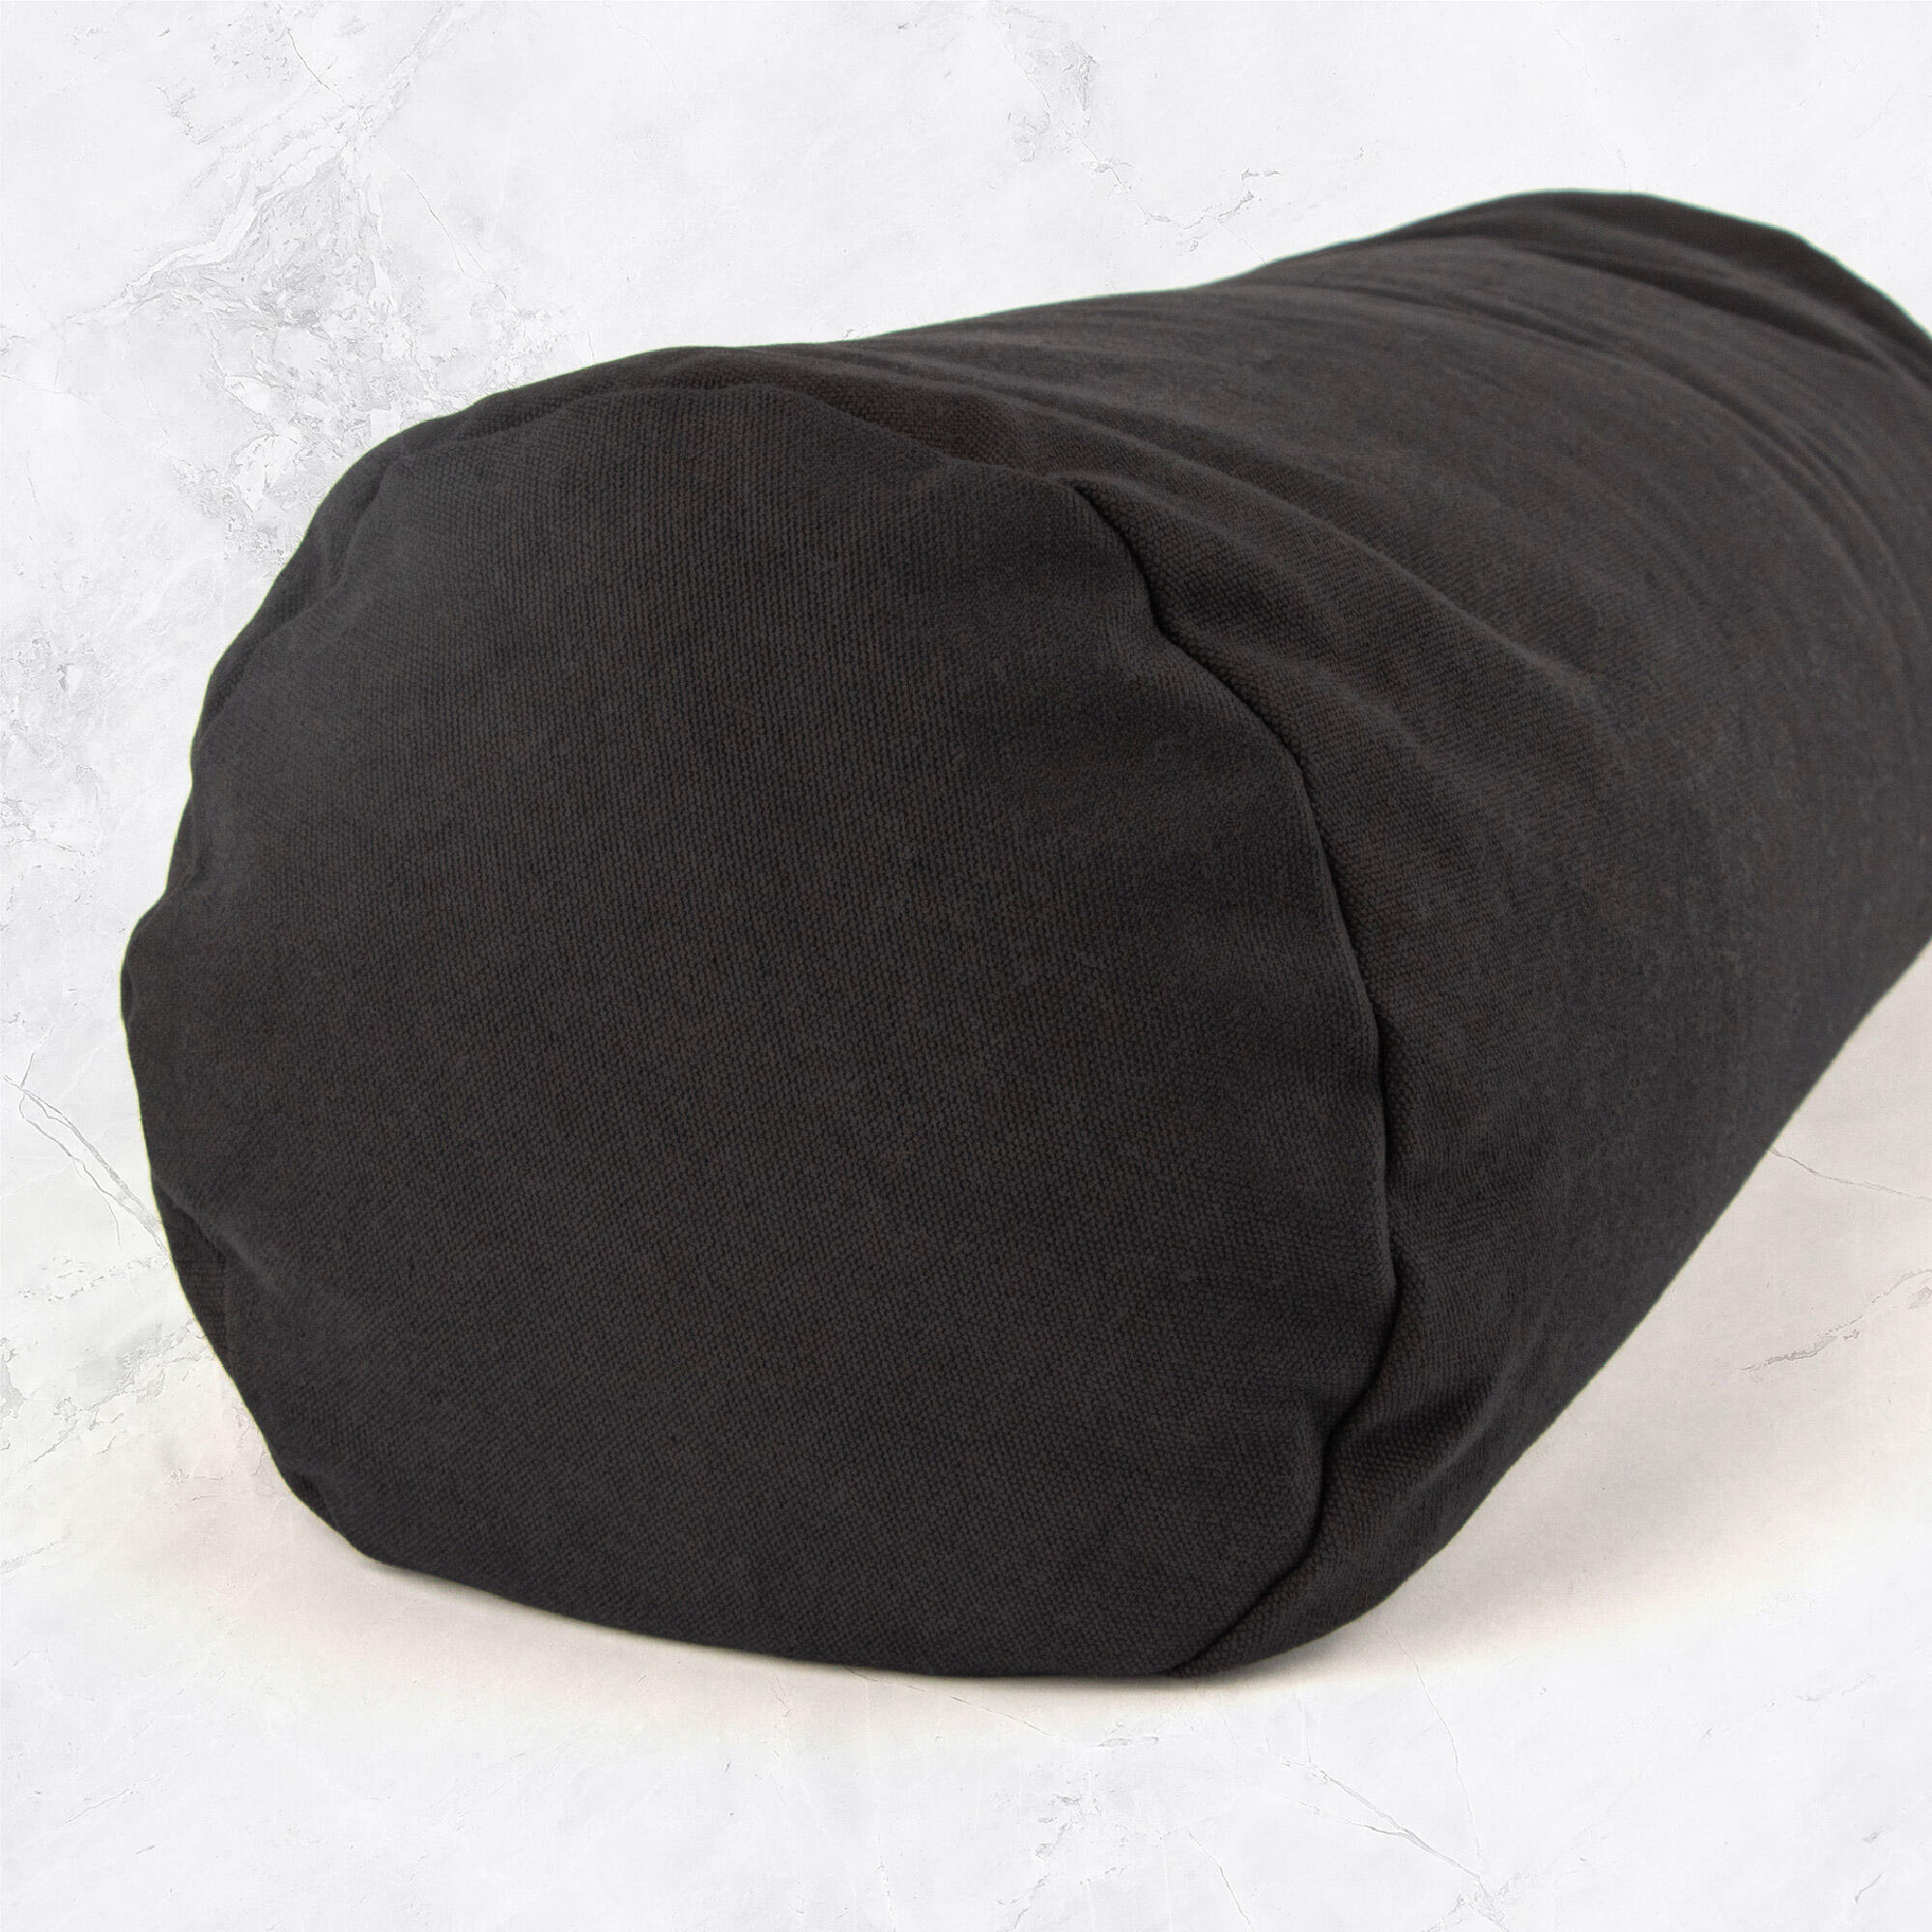 Myga Buckwheat Support Bolster Pillow - Black 5/8